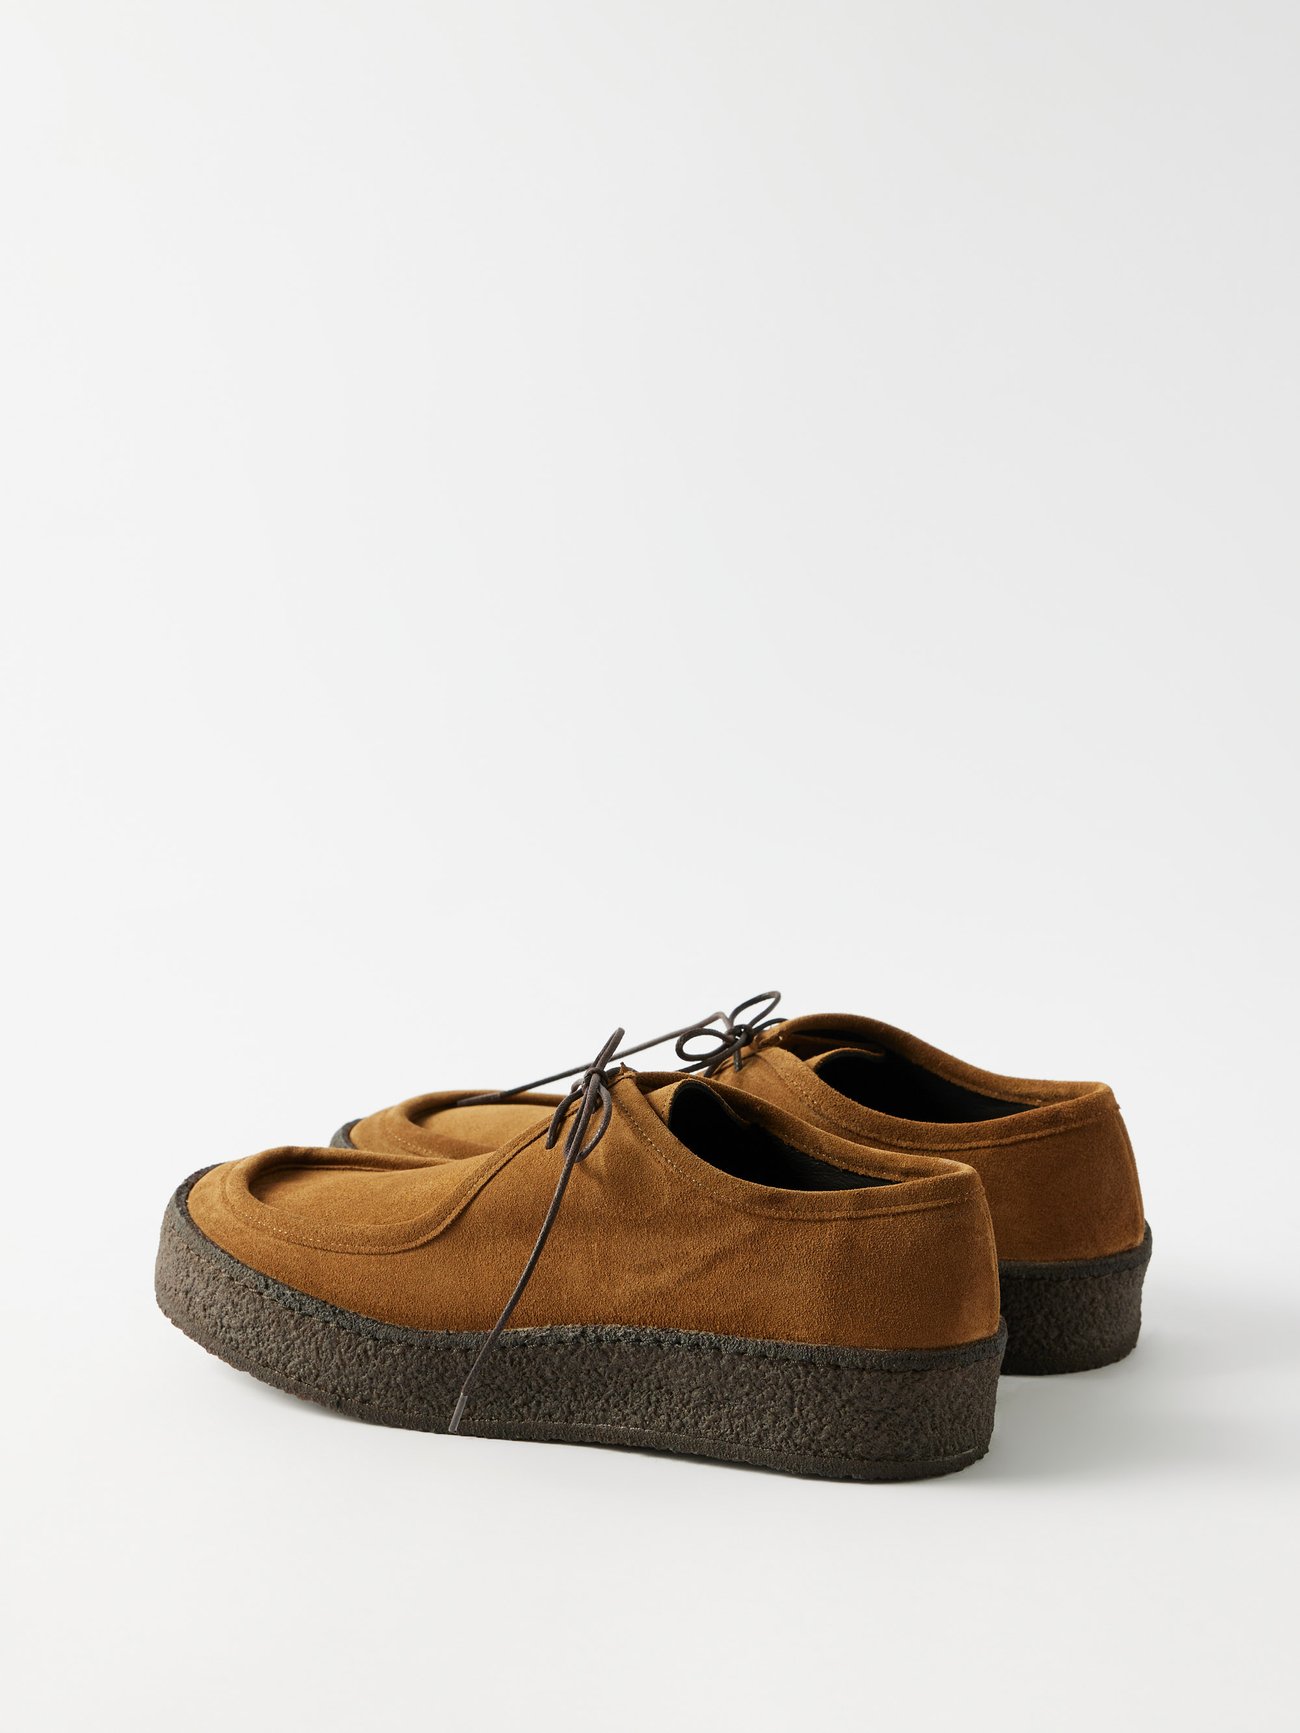 Leitch crepe-sole suede shoes